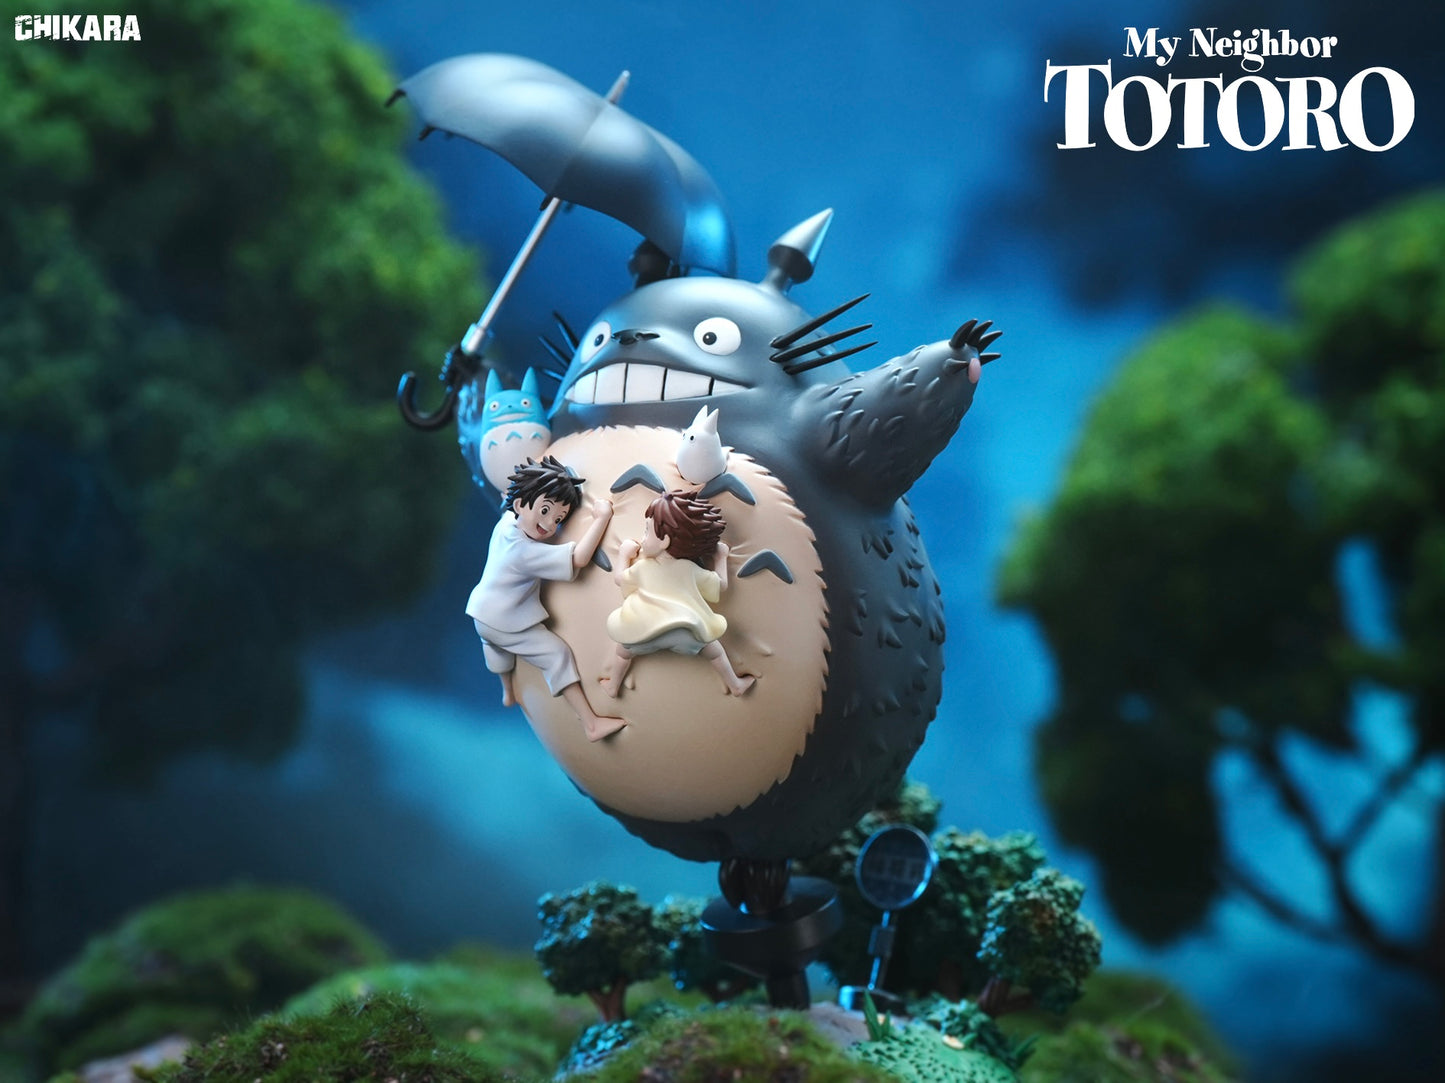 My Neighbor Totoro Studio Ghibli Desk Series Totoro Resin Statue - CHIKARA Studio [Pre-Order]